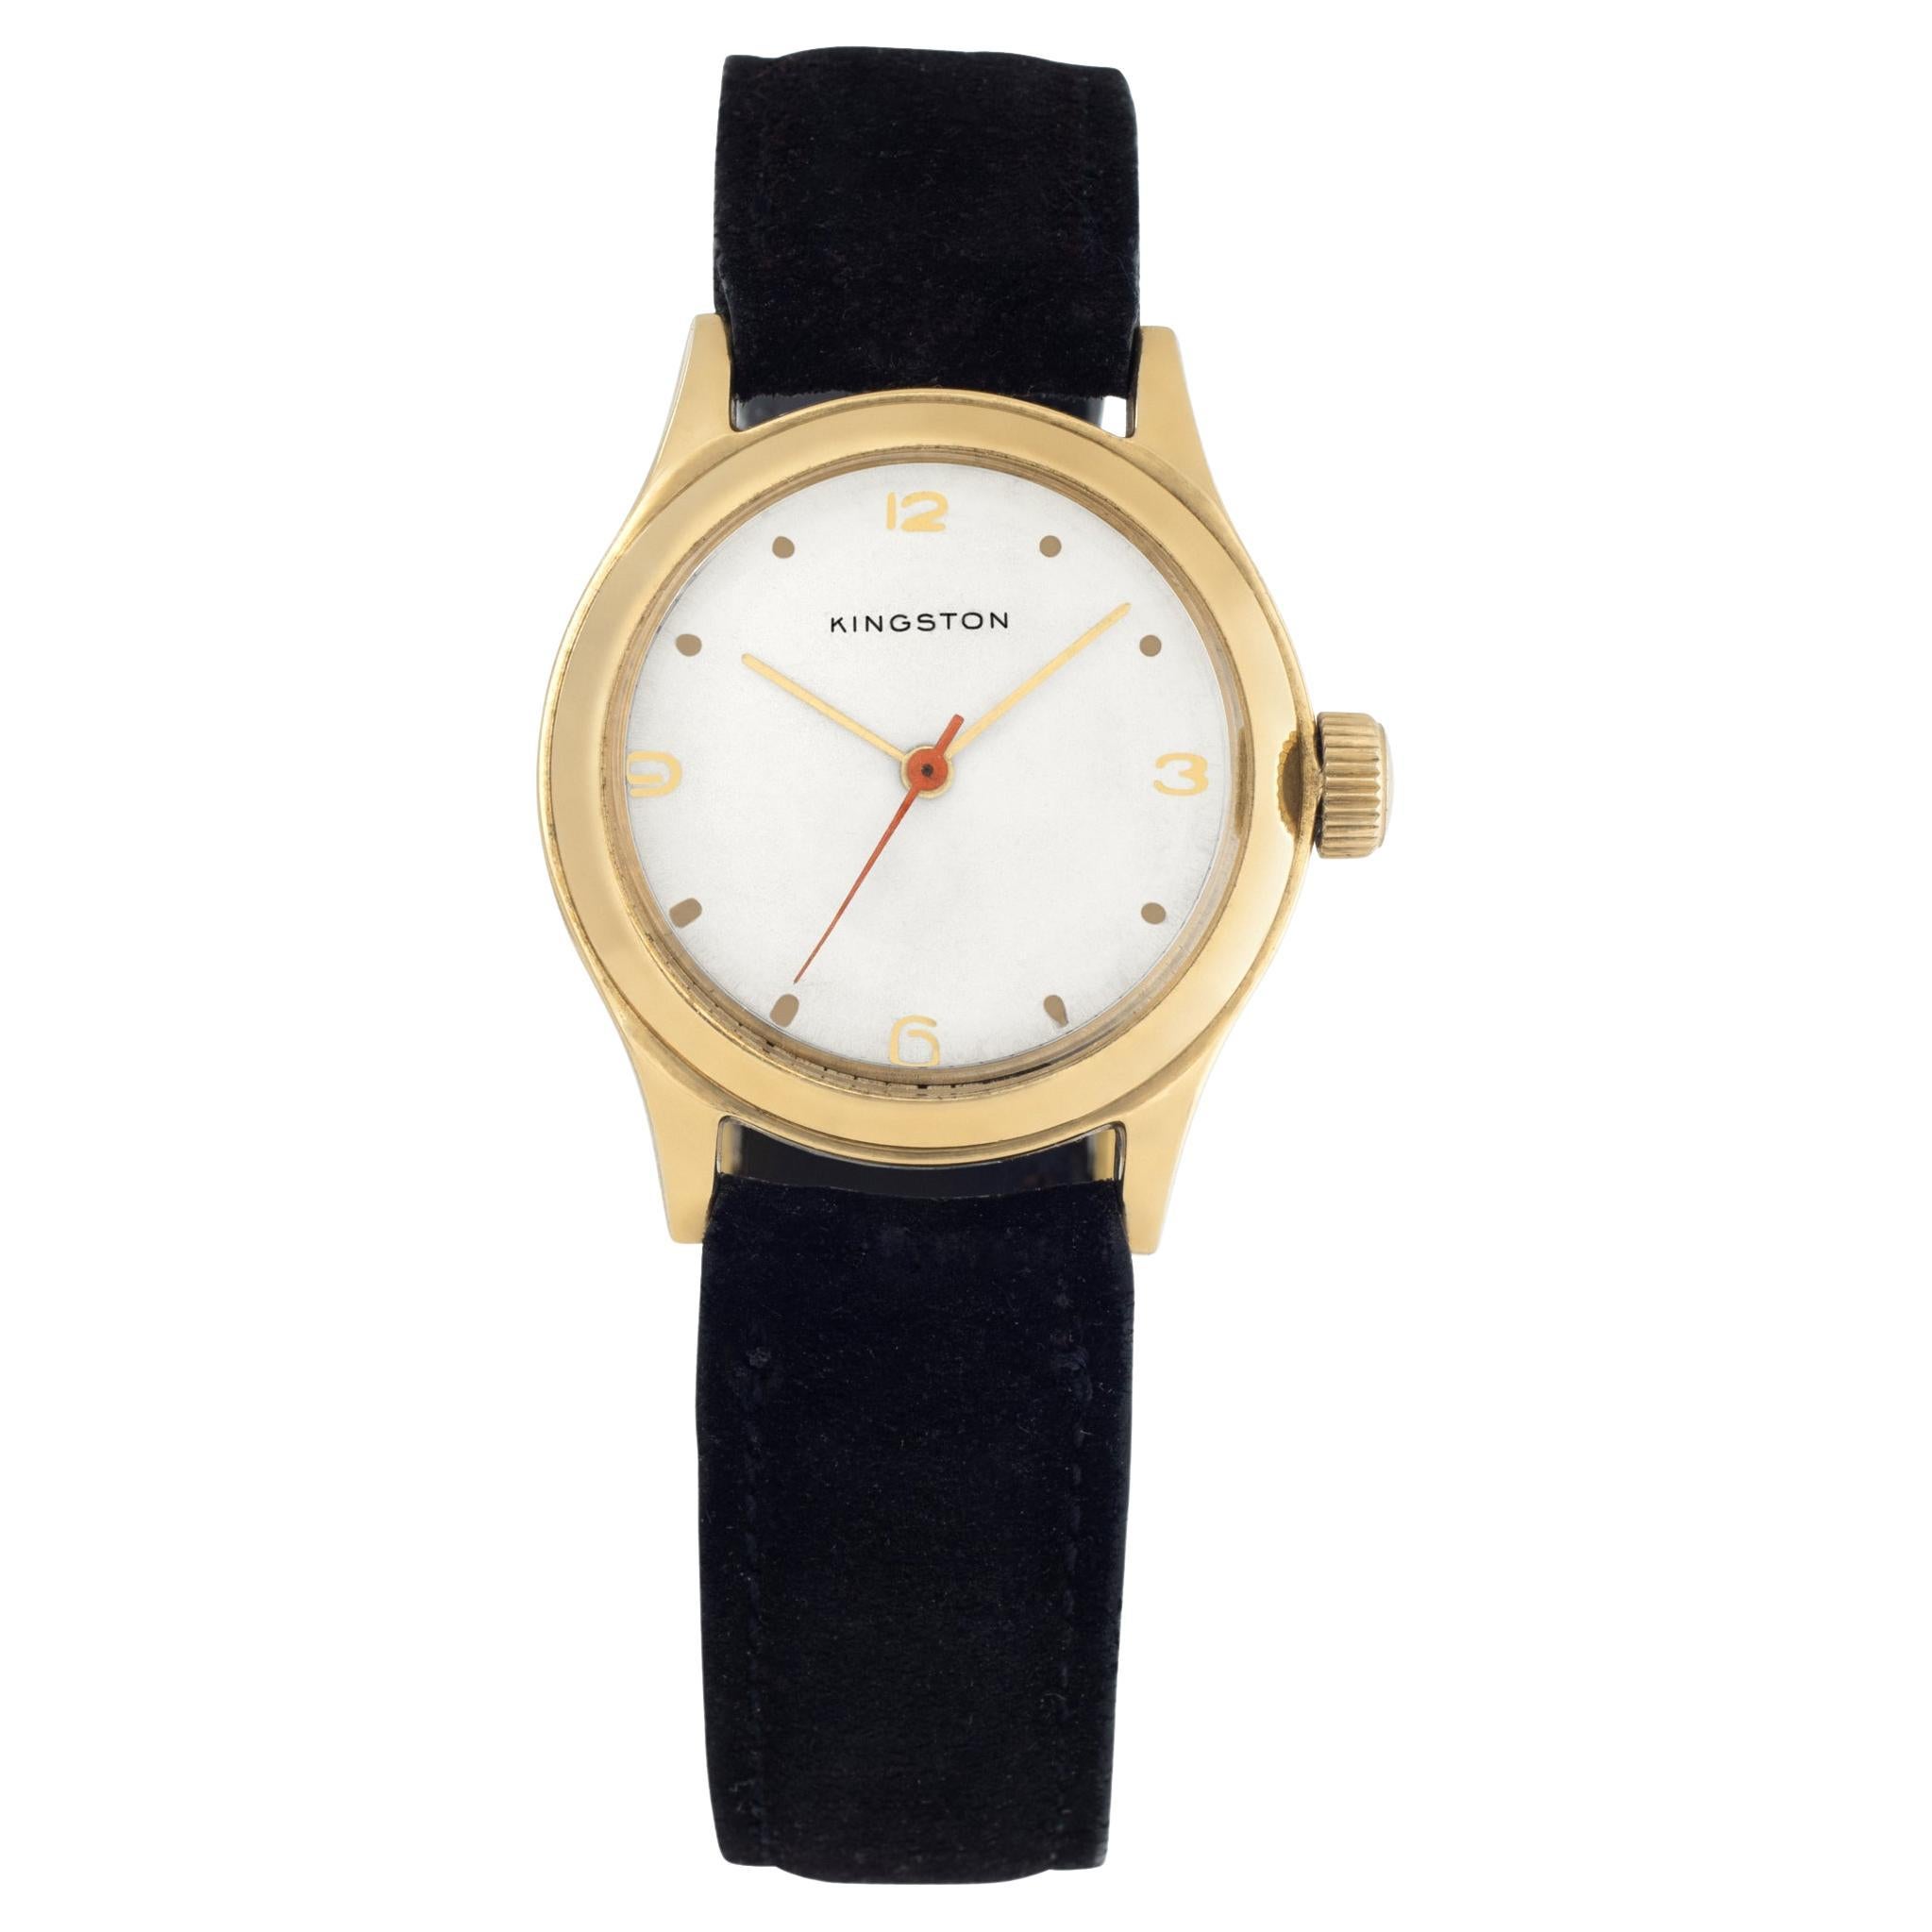 Kingston Vintage 14k Yellow Gold Wristwatch Ref W50162 For Sale